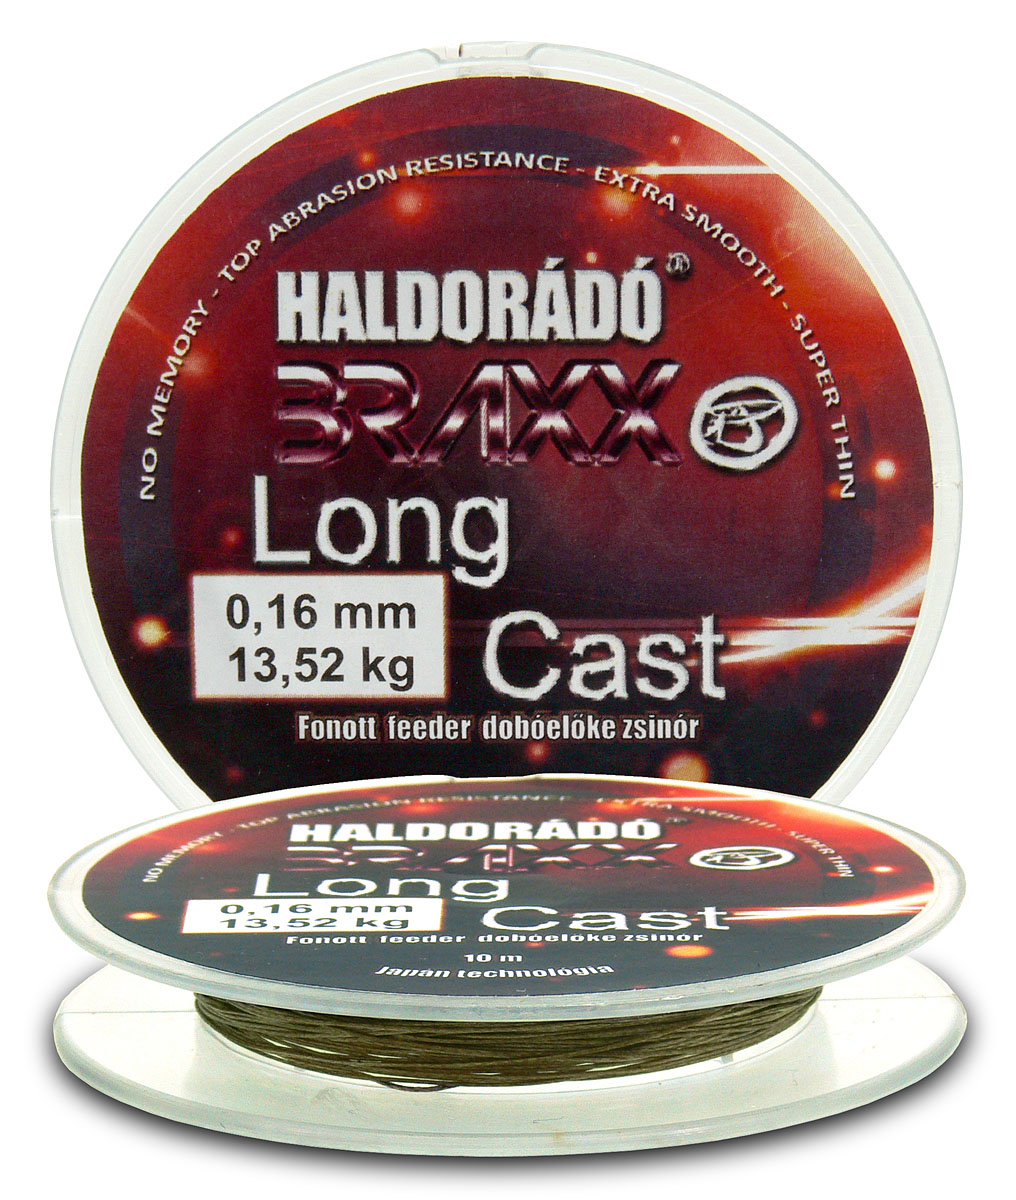 HALDORÁDÓ BRAXX LONG CAST 0.16MM